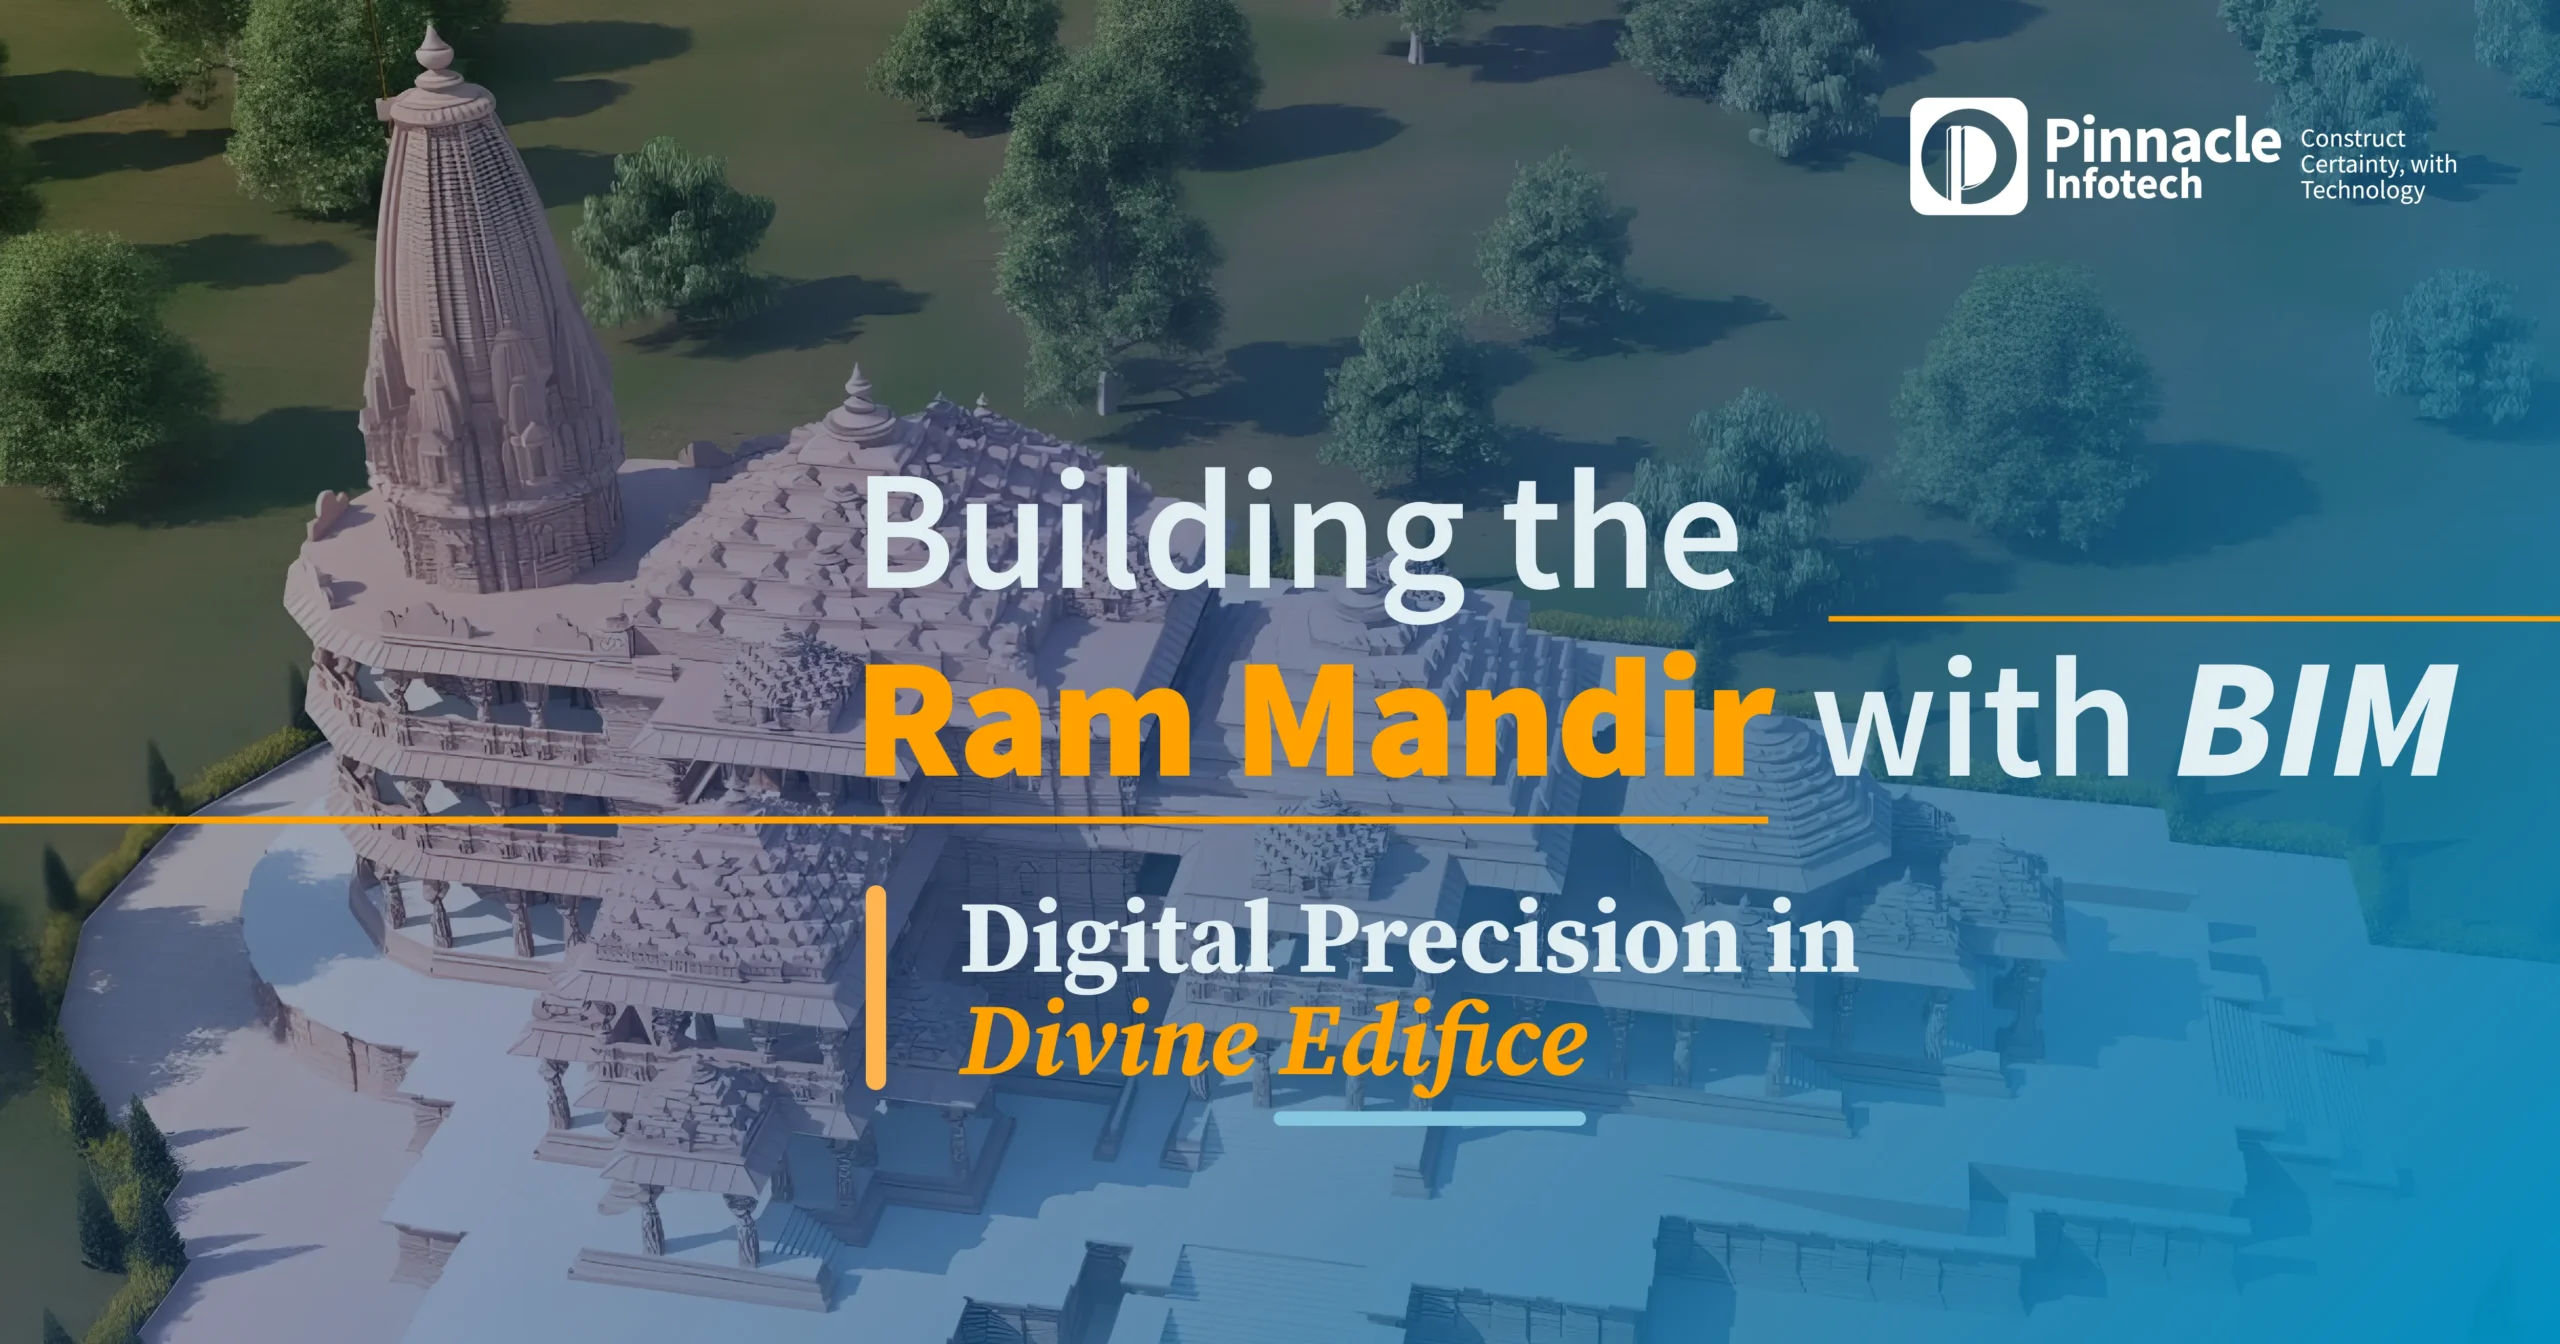 Pinnacle Infotech - Building the Ram Mandir with BIM